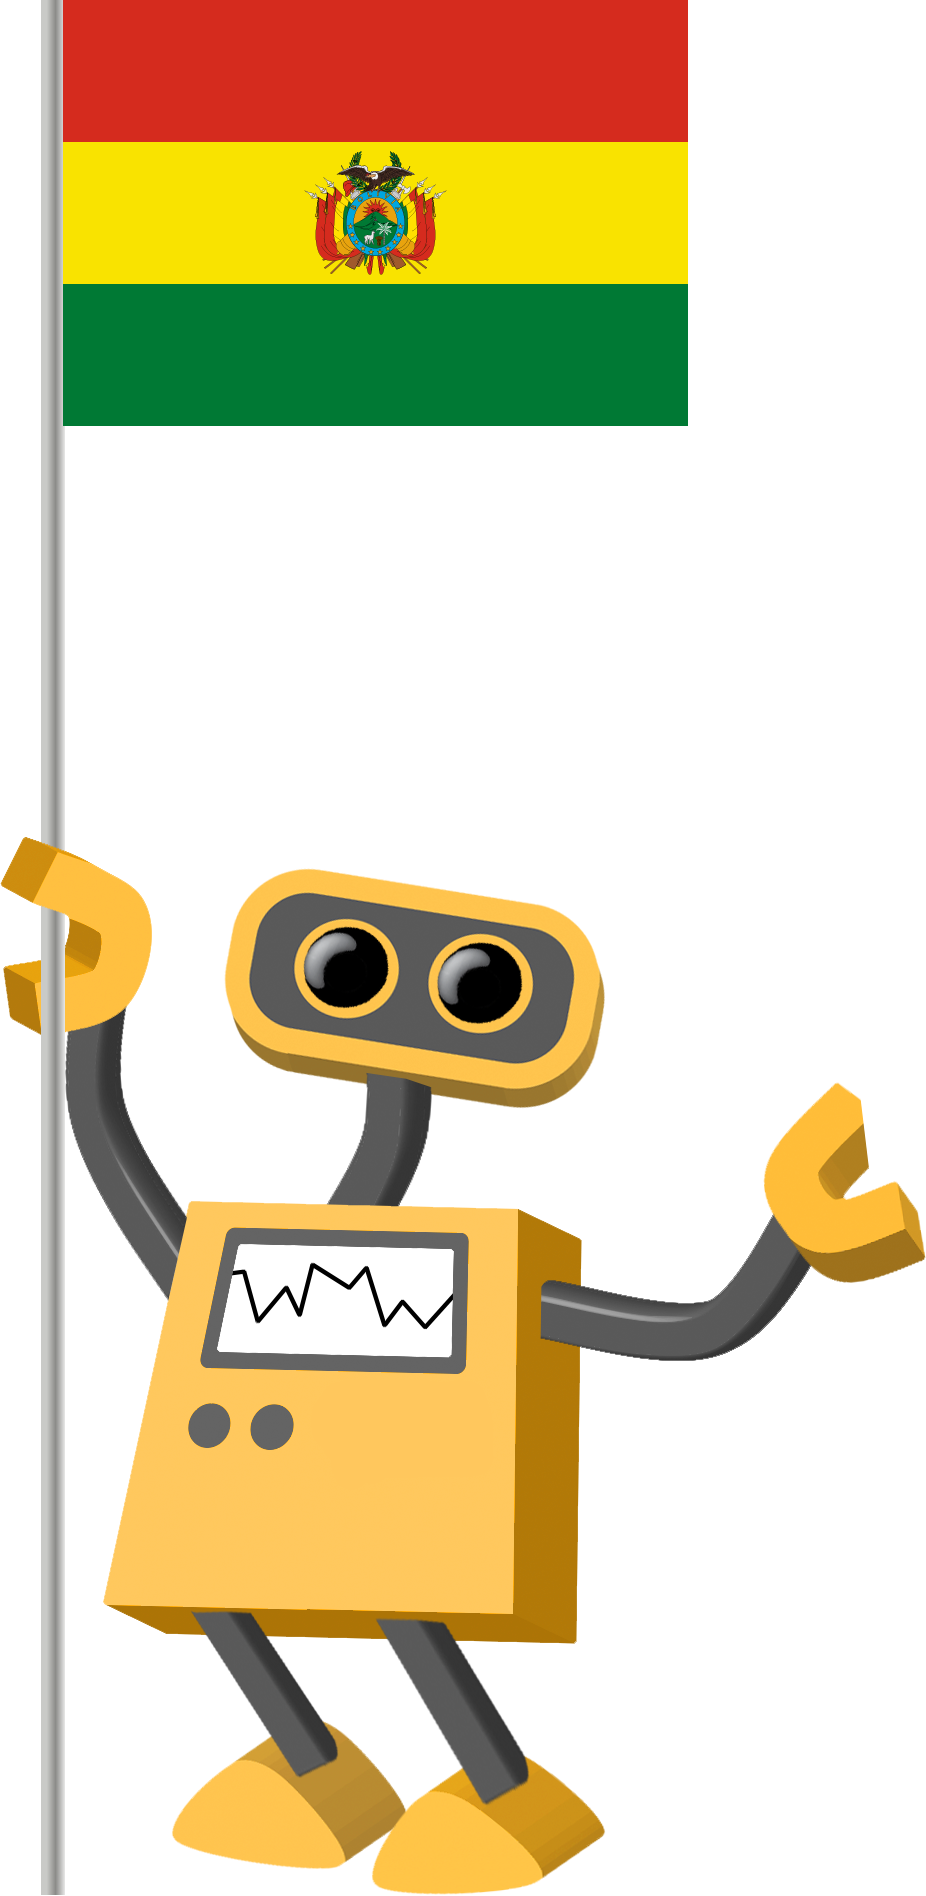 A Cartoon Robot Holding A Pole